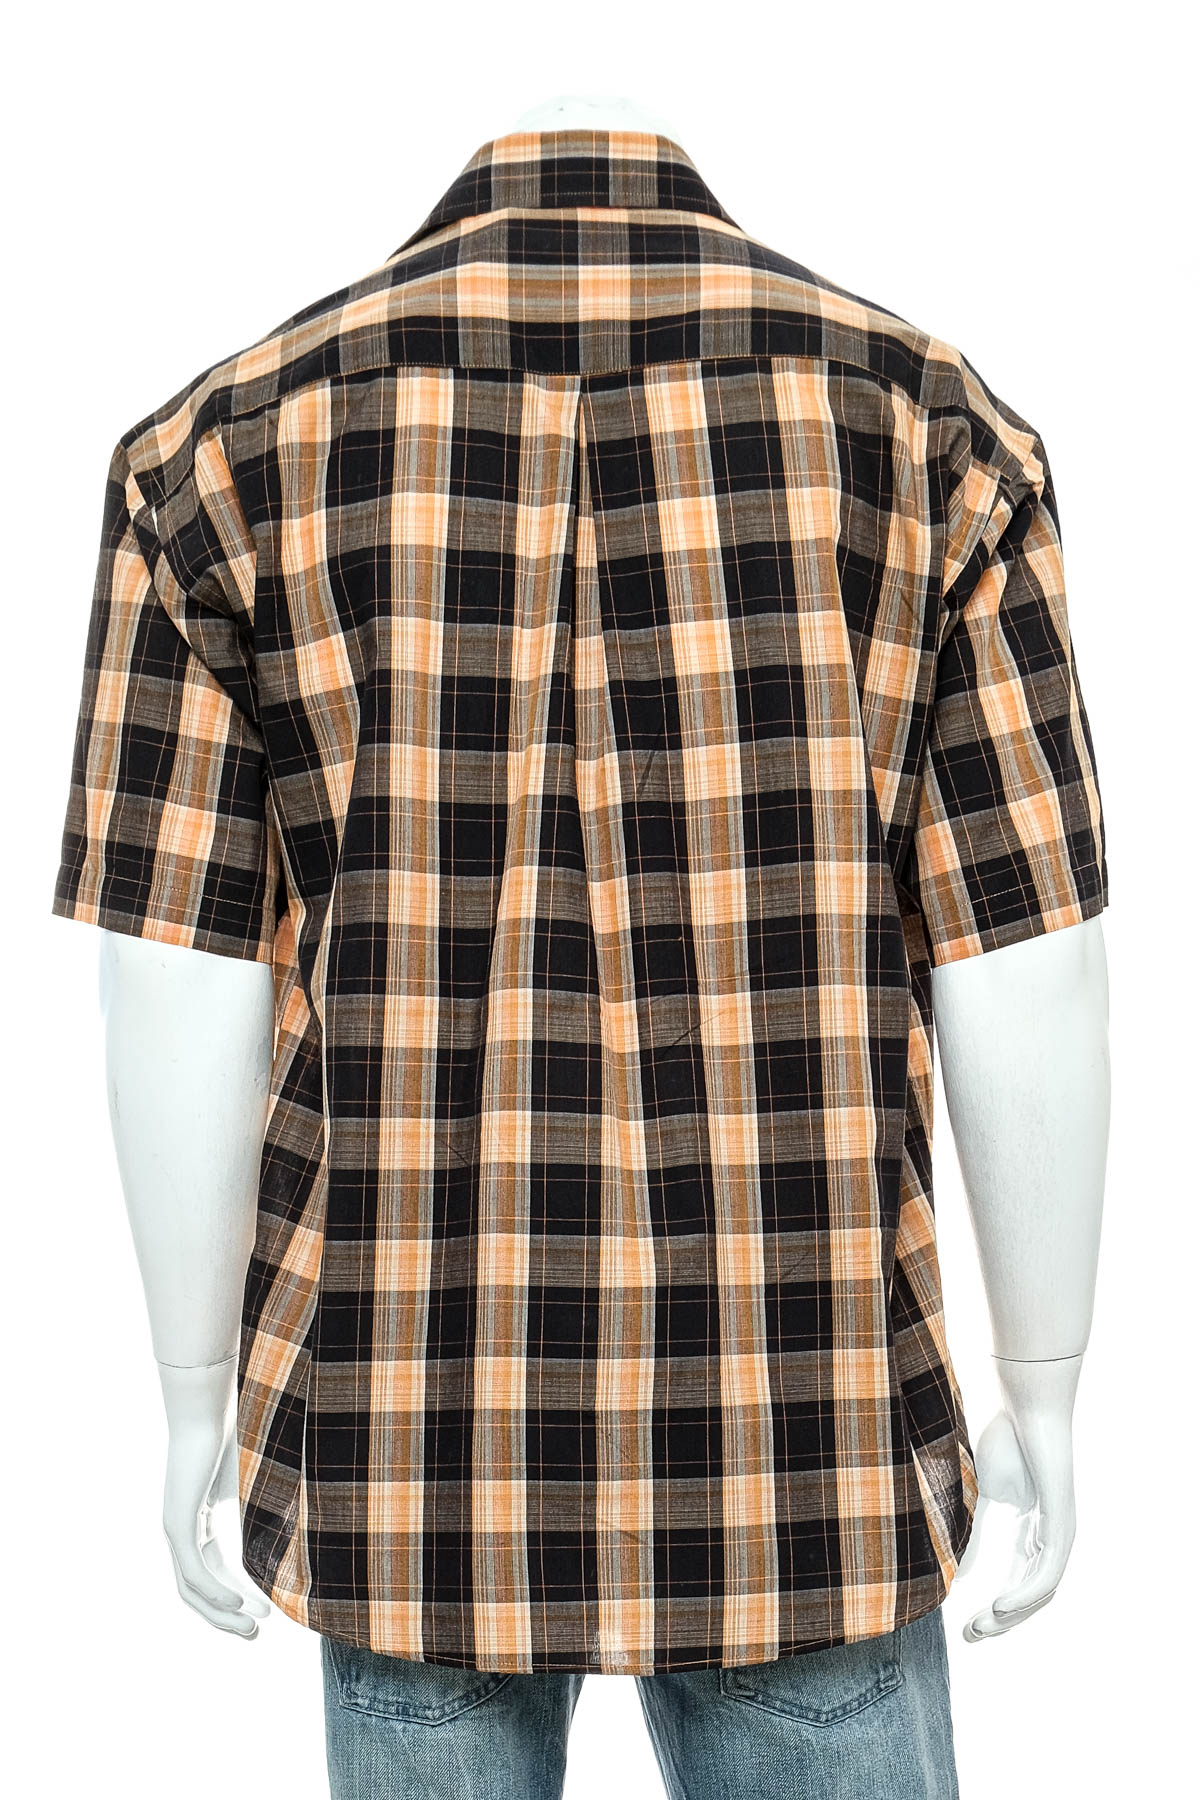 Men's shirt - Paul Smith - 1